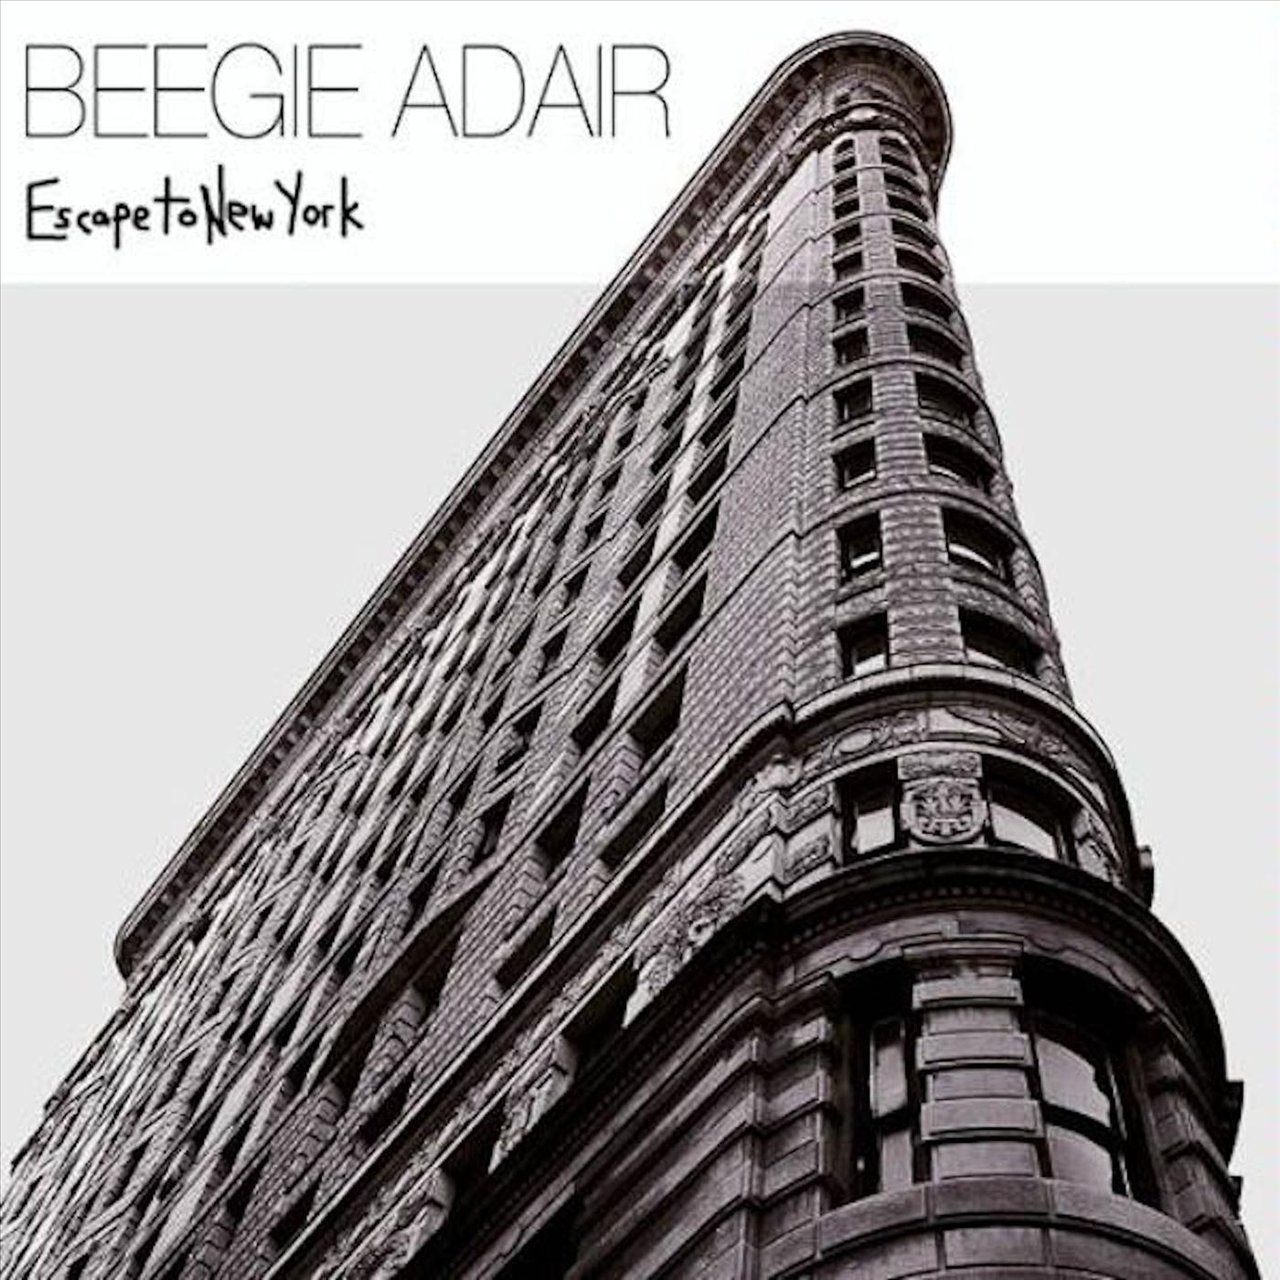 Beegie Adair - Escape to New York [1998]